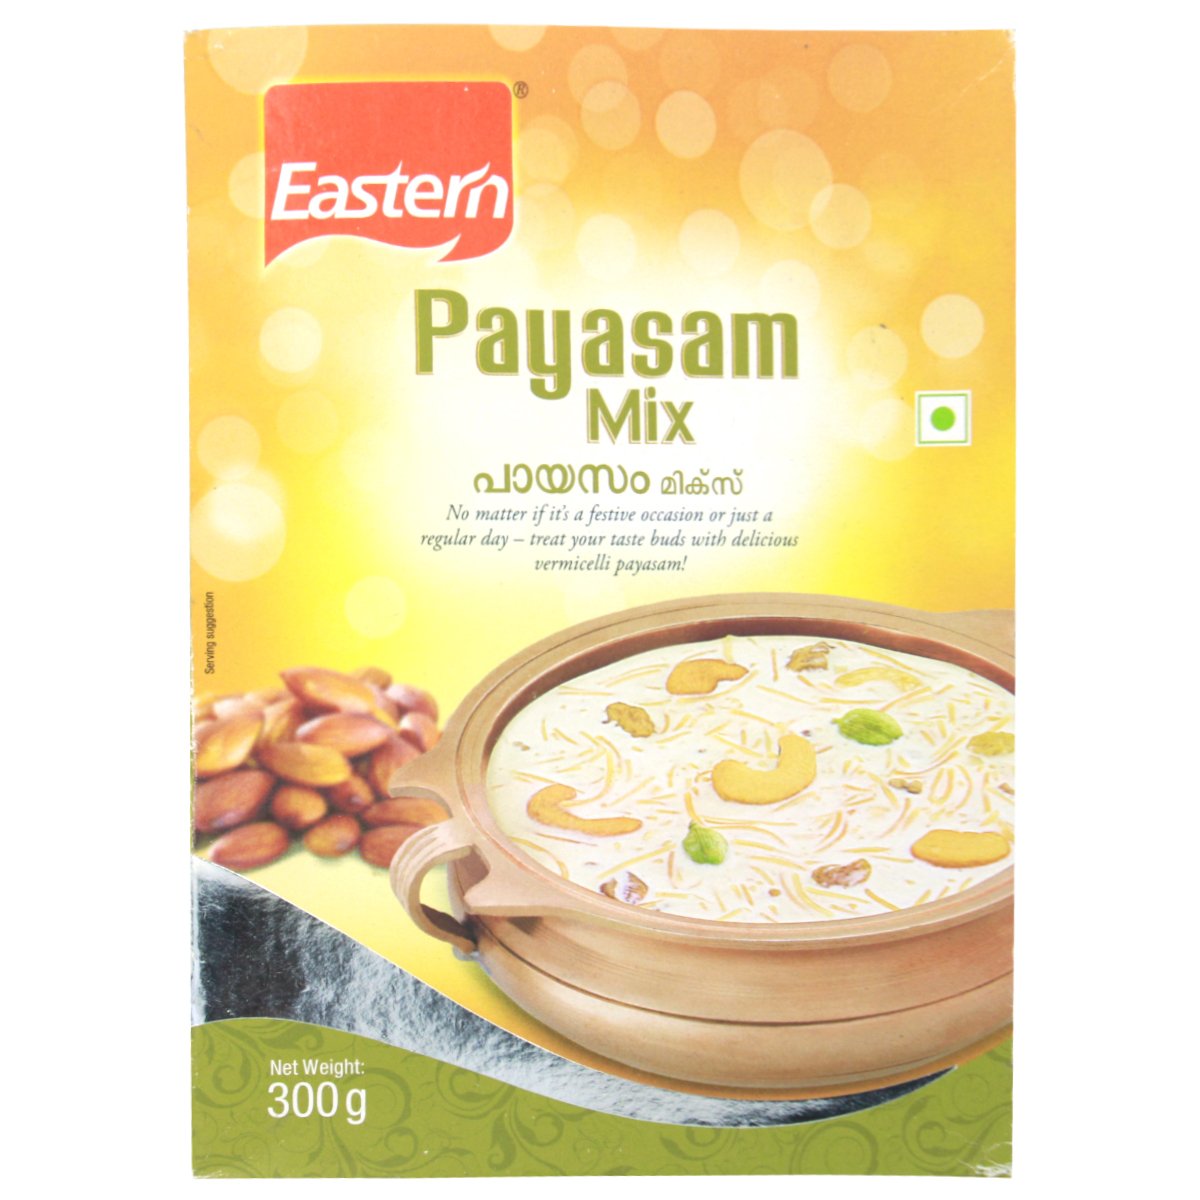 Eastern vermicelli payasam mix